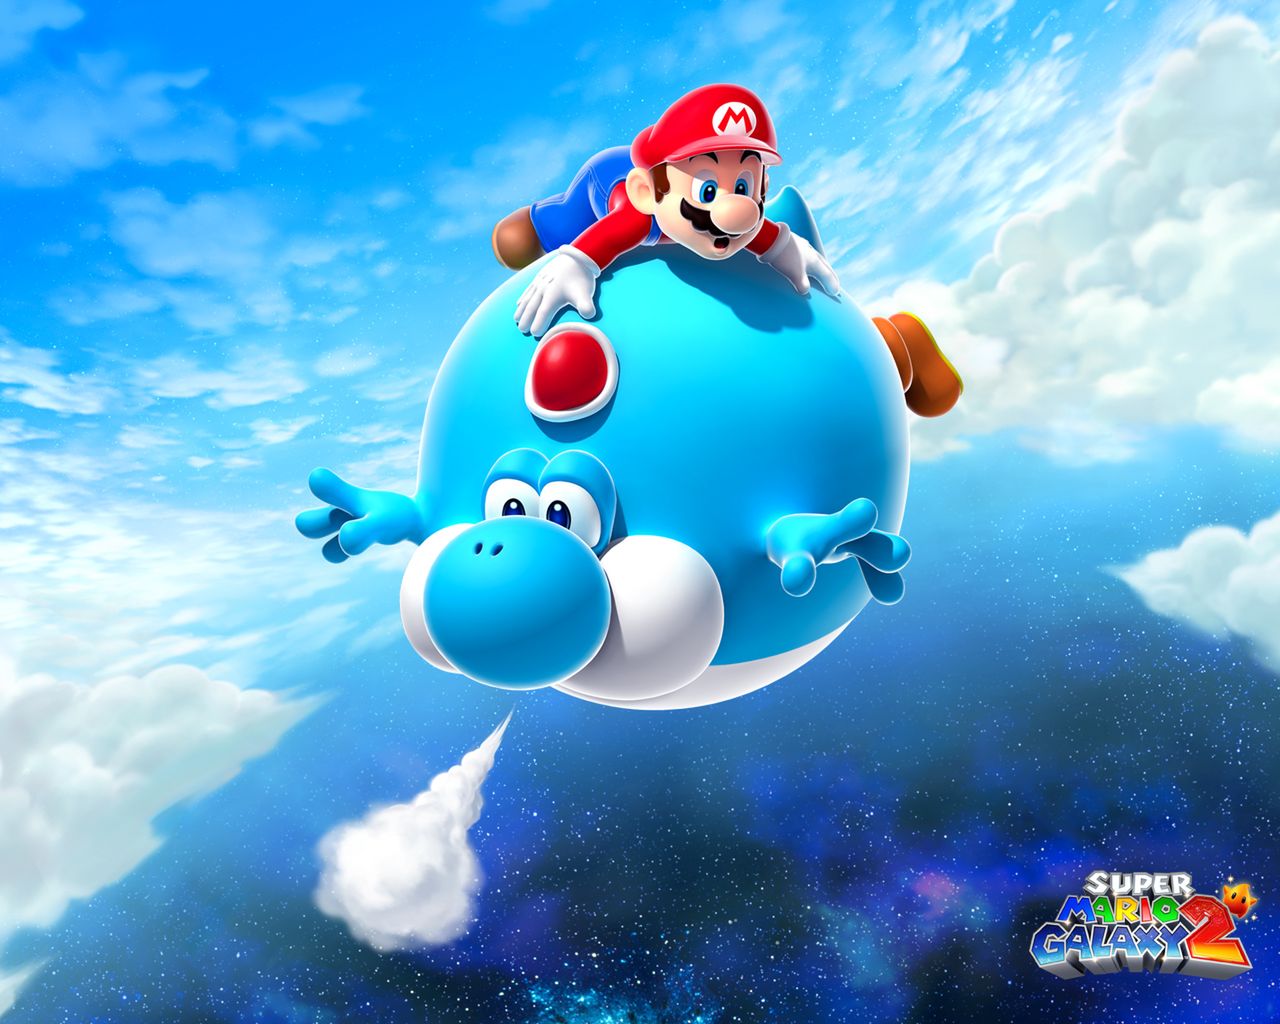 Premierowy zwiastun Super Mario Galaxy 2